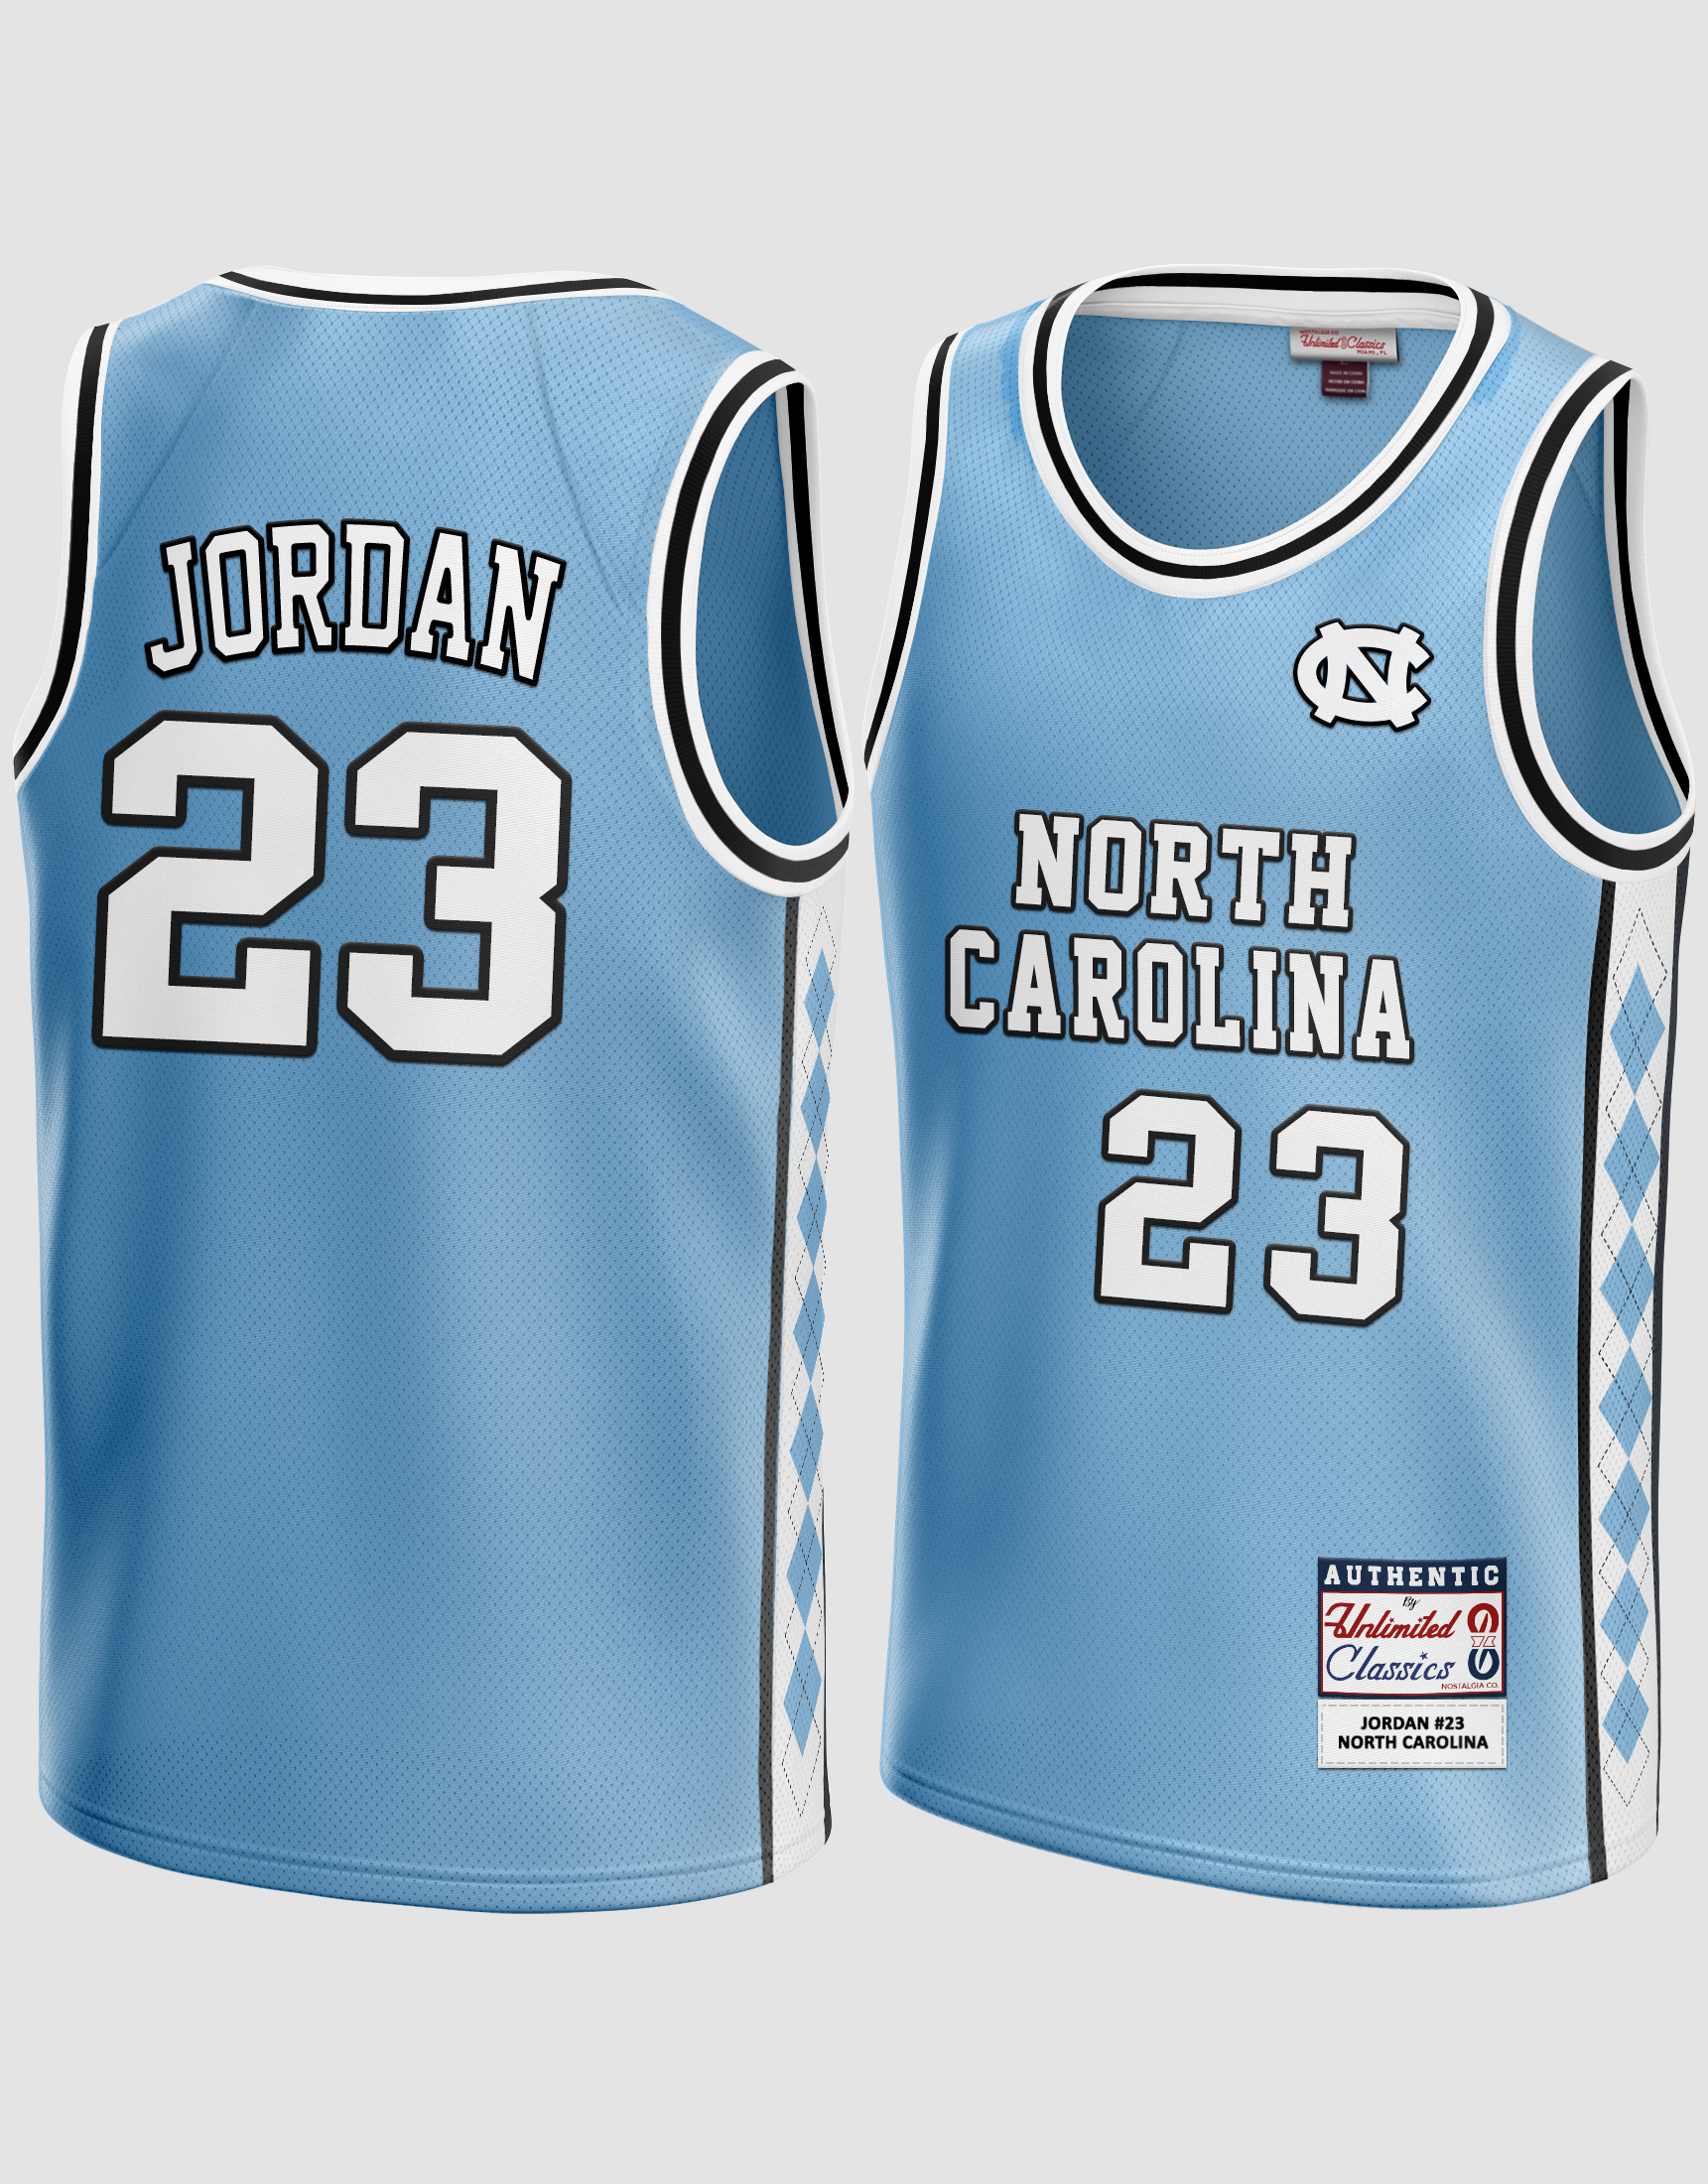 Michael Jordan Carolina Basketball Facts - University of North